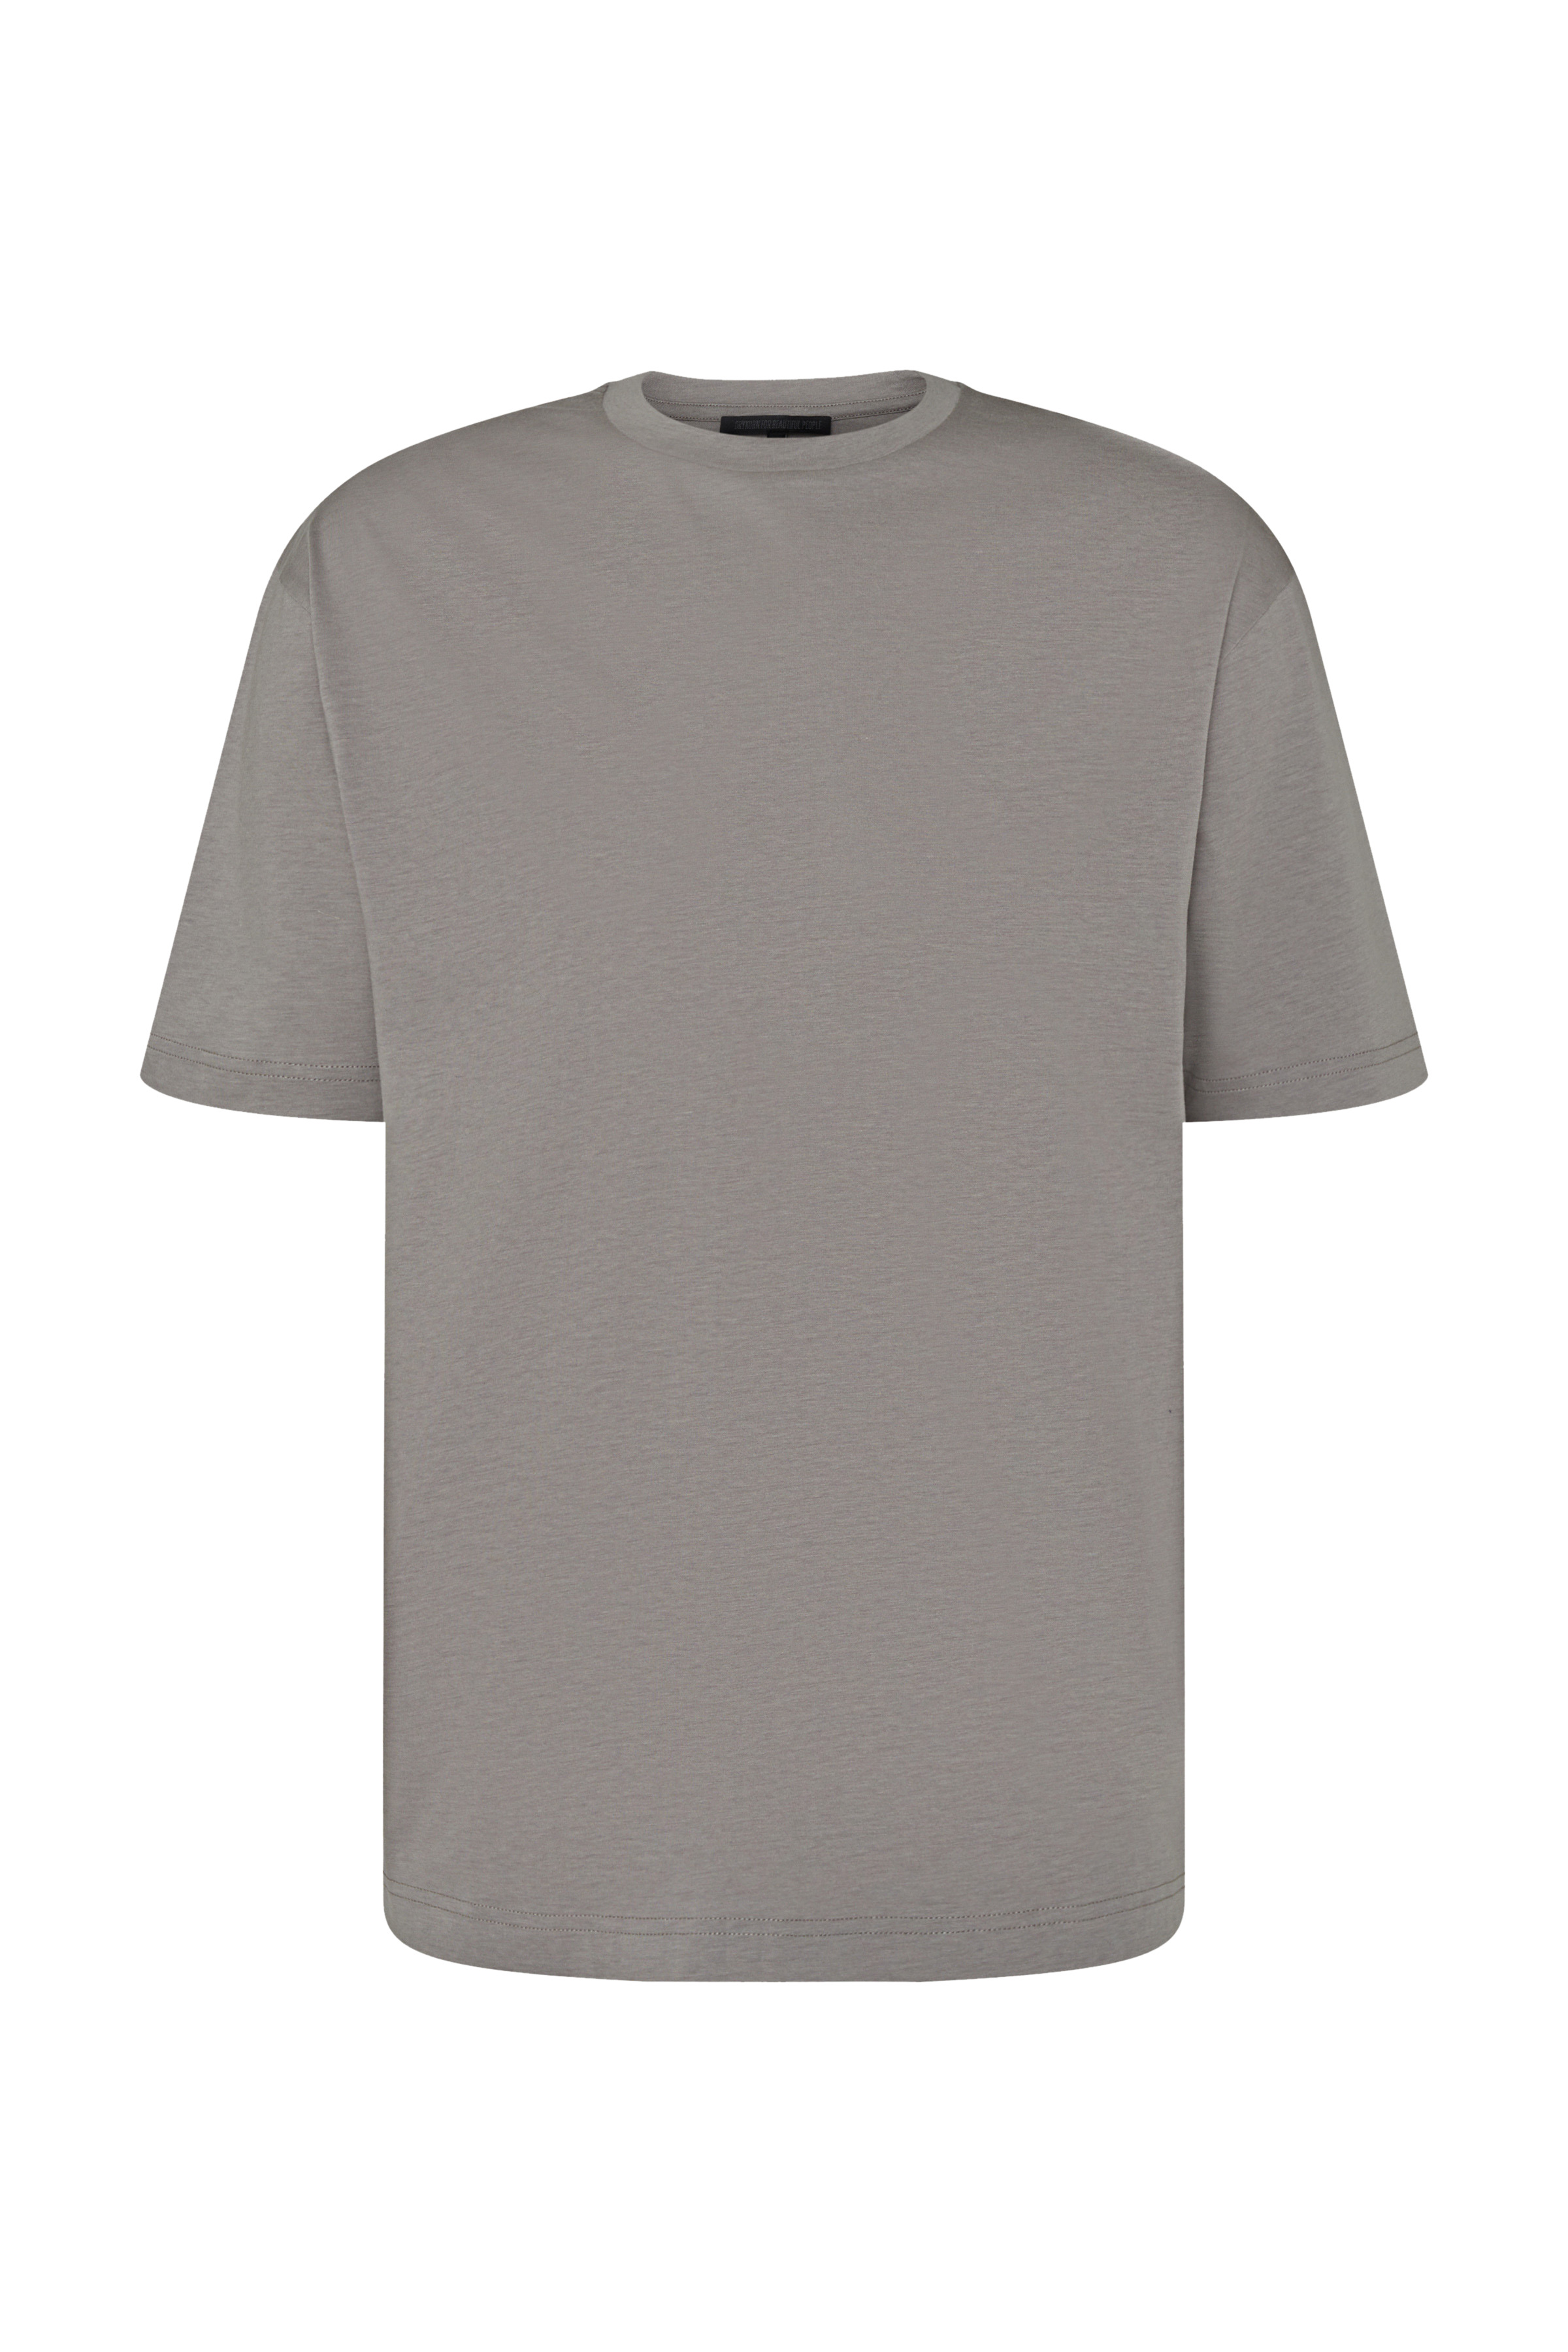 DRYKORN 520109 GILBERD 10 Herren T-Shirt Grau